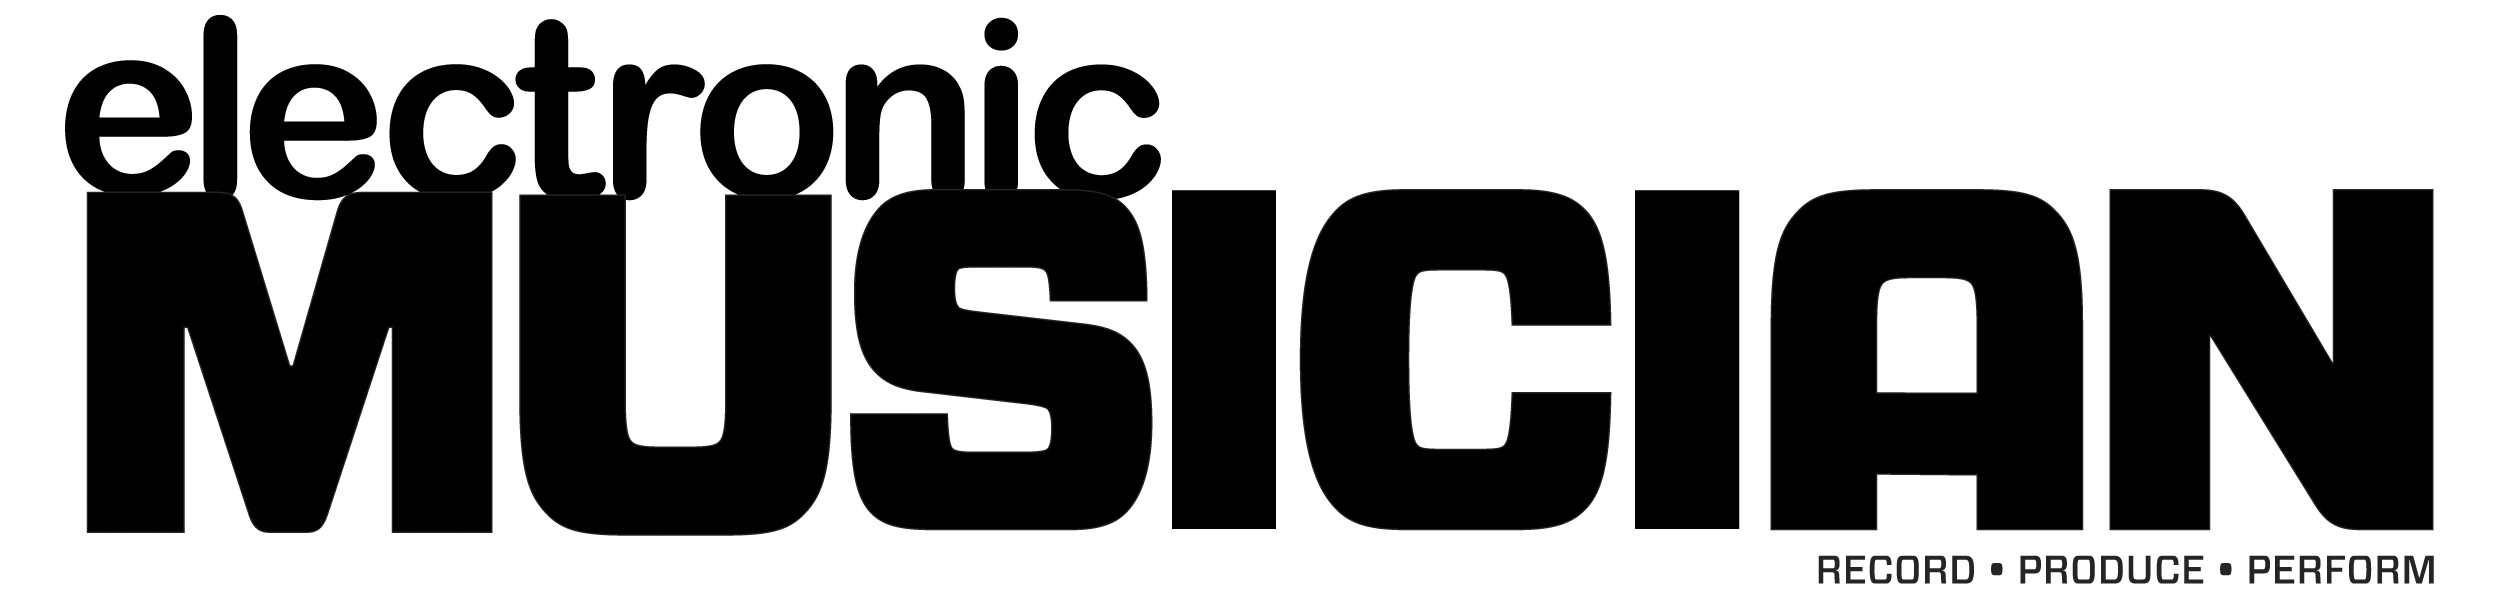 electronicmusician-logo.jpg